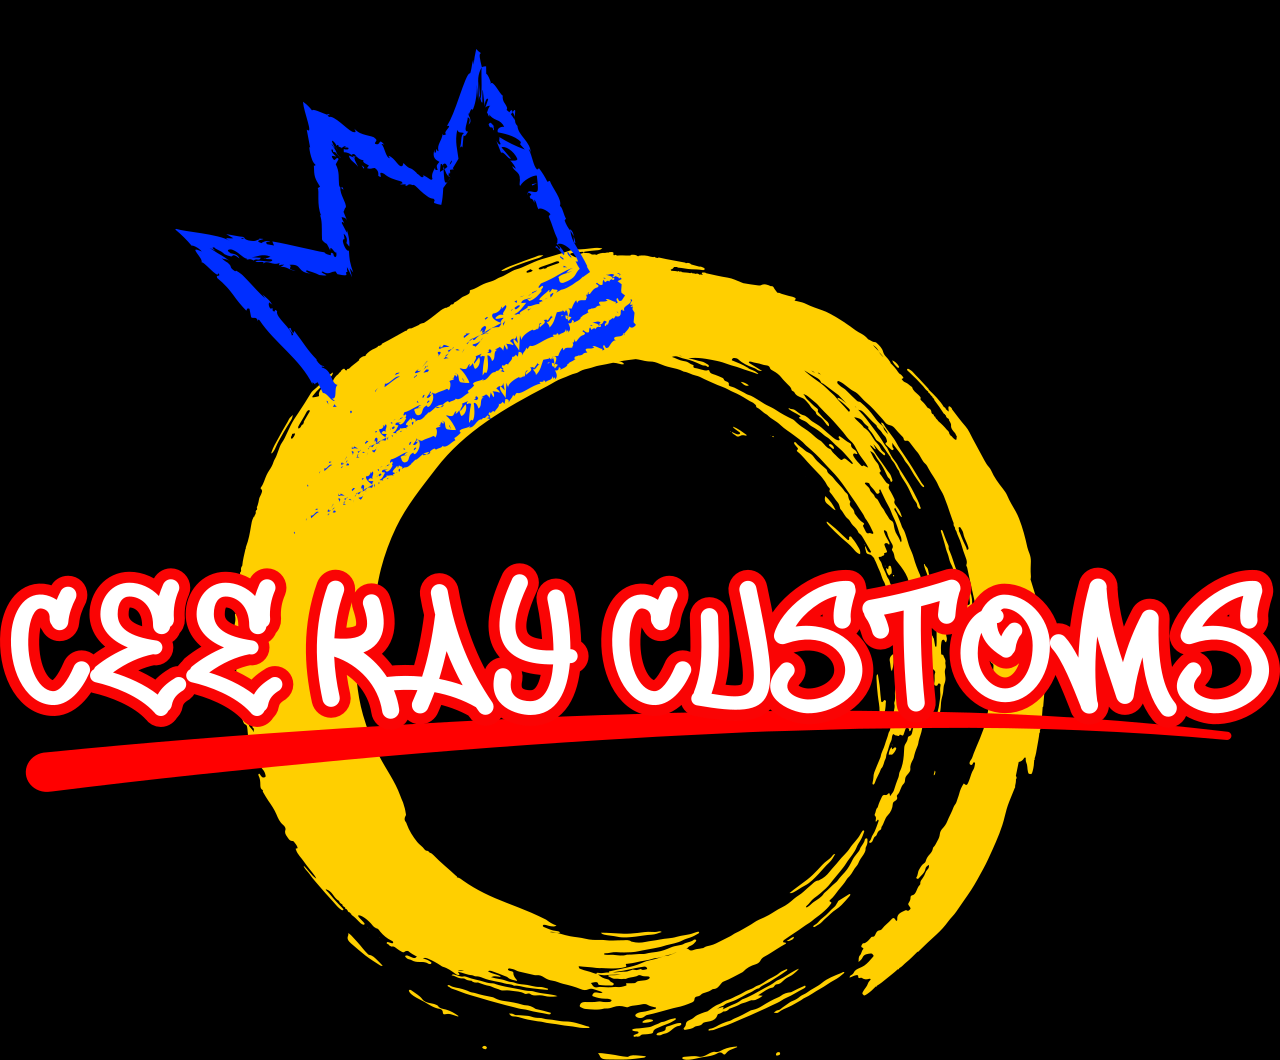 Cee Kay Customs's web page